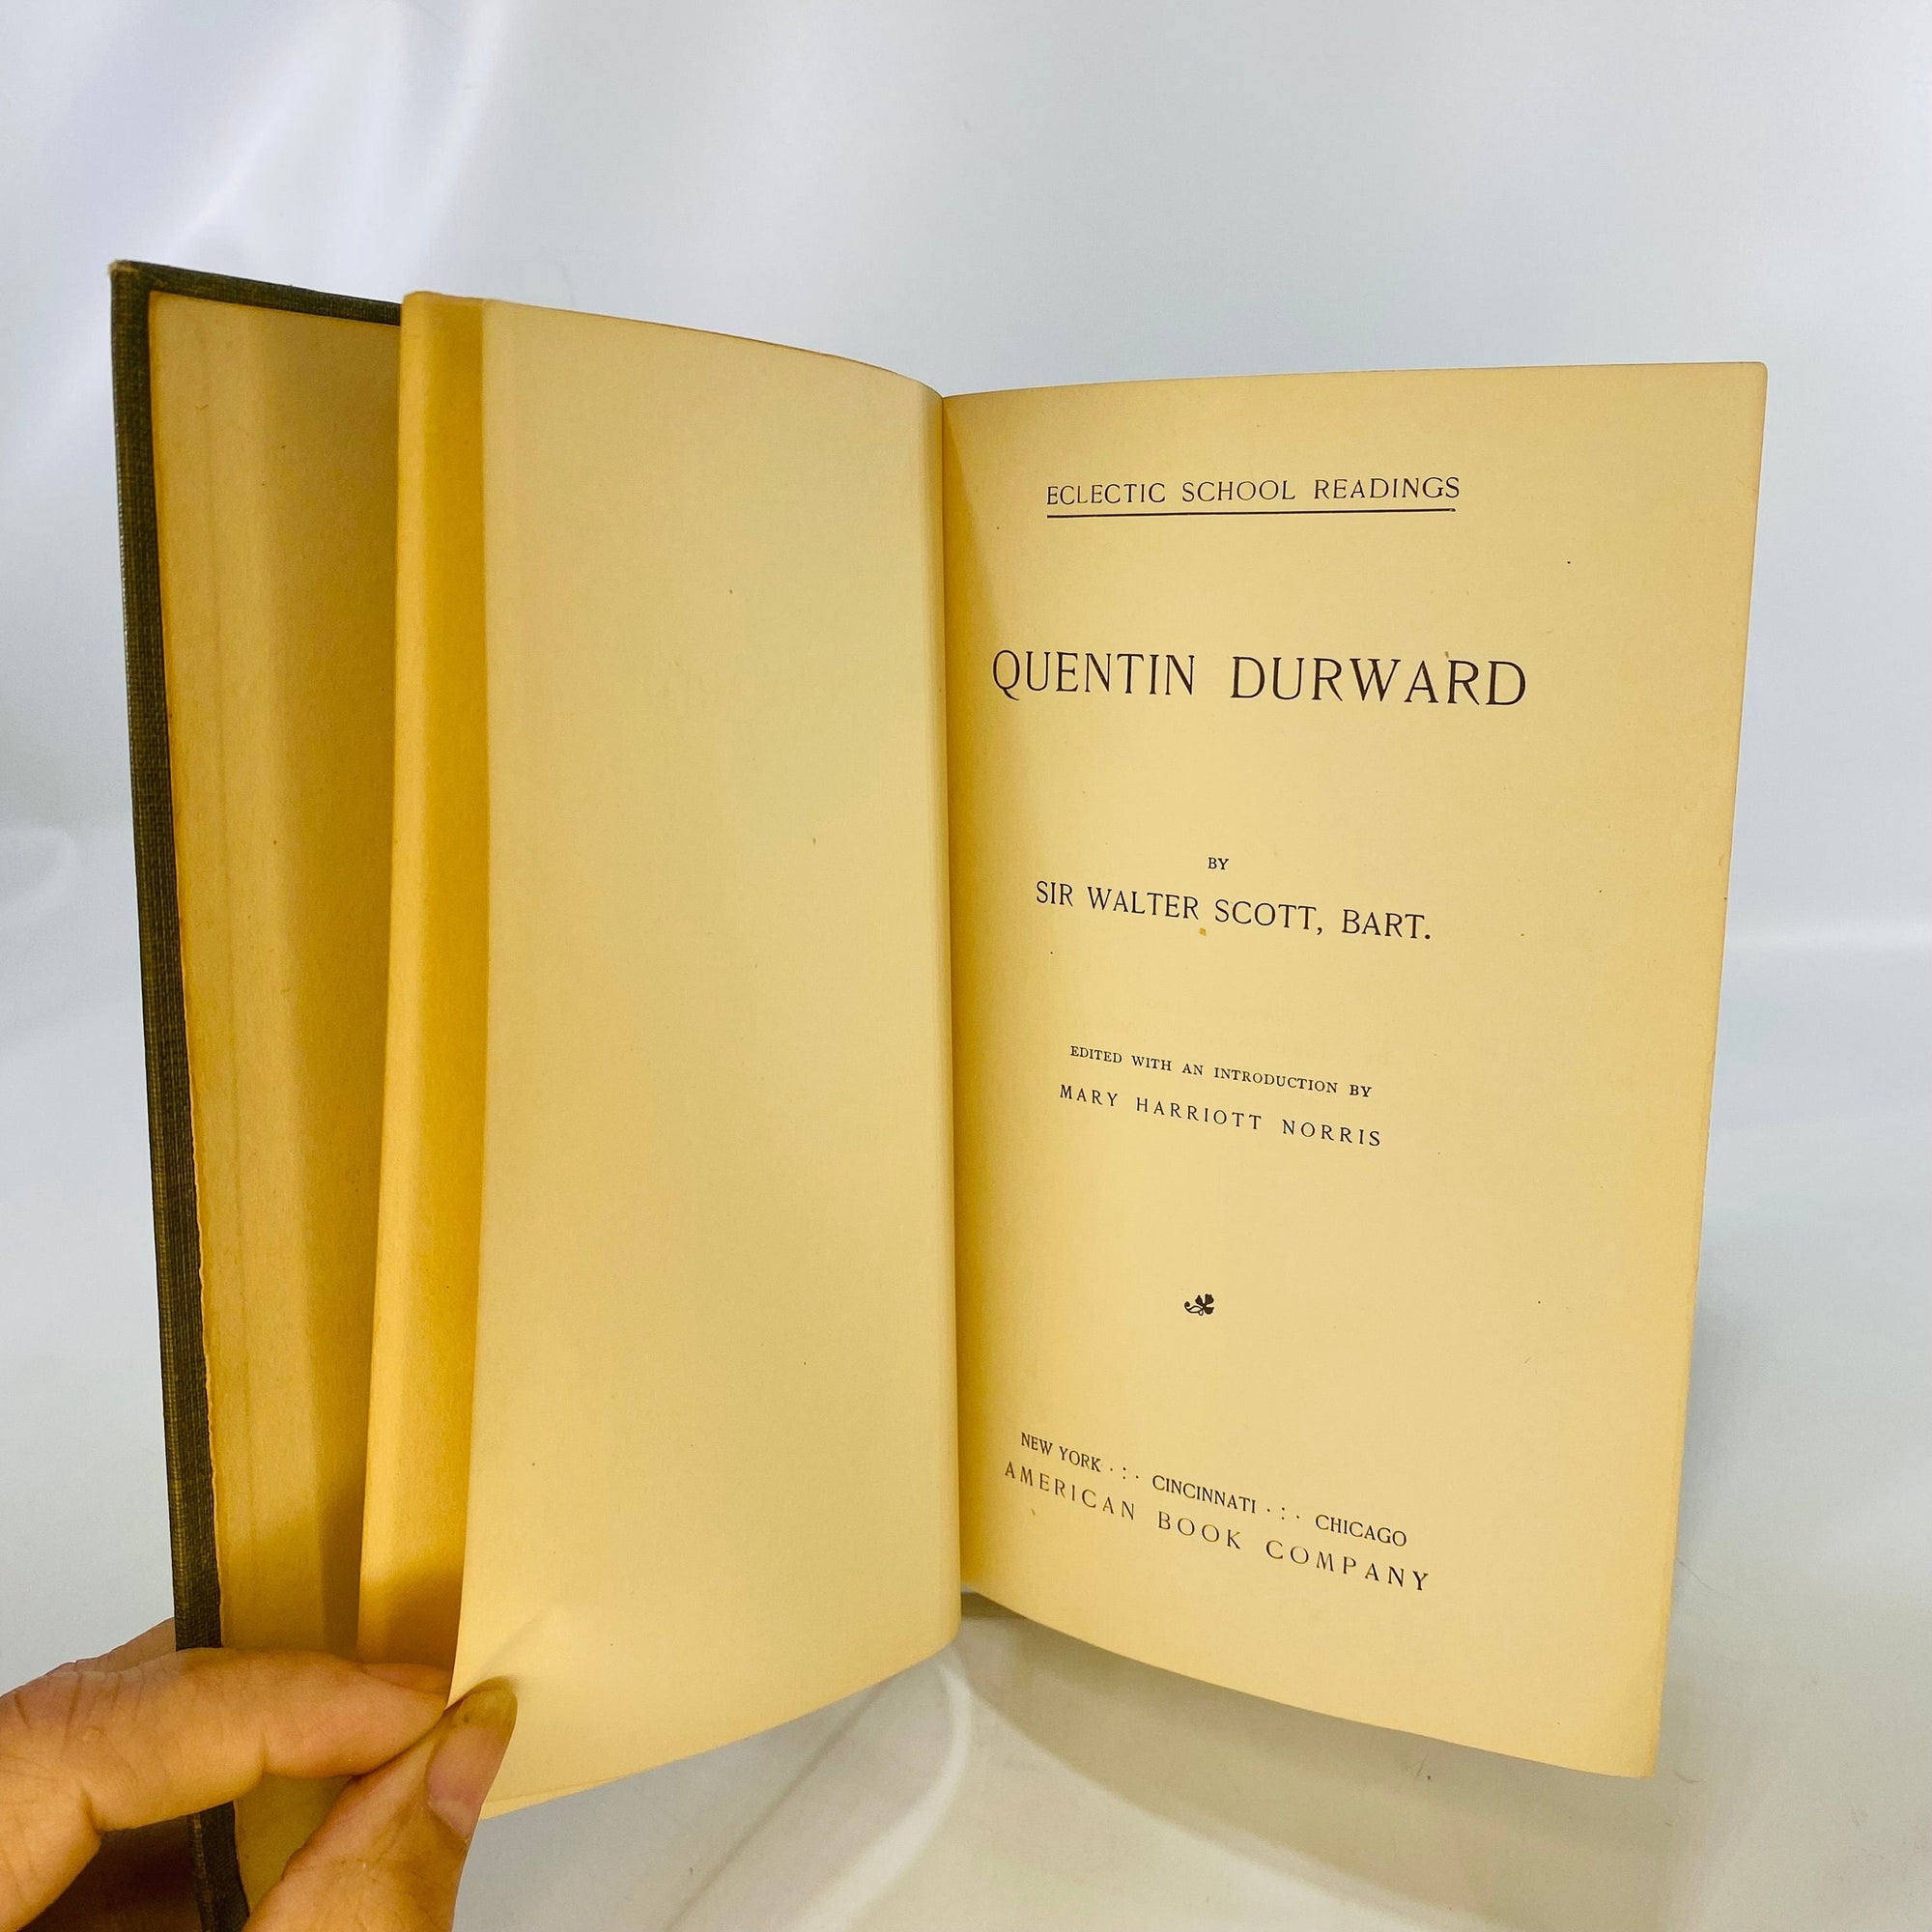 Quentin Durward by Sir Walter Scott Bart 1900 American Book Company Vintage Book